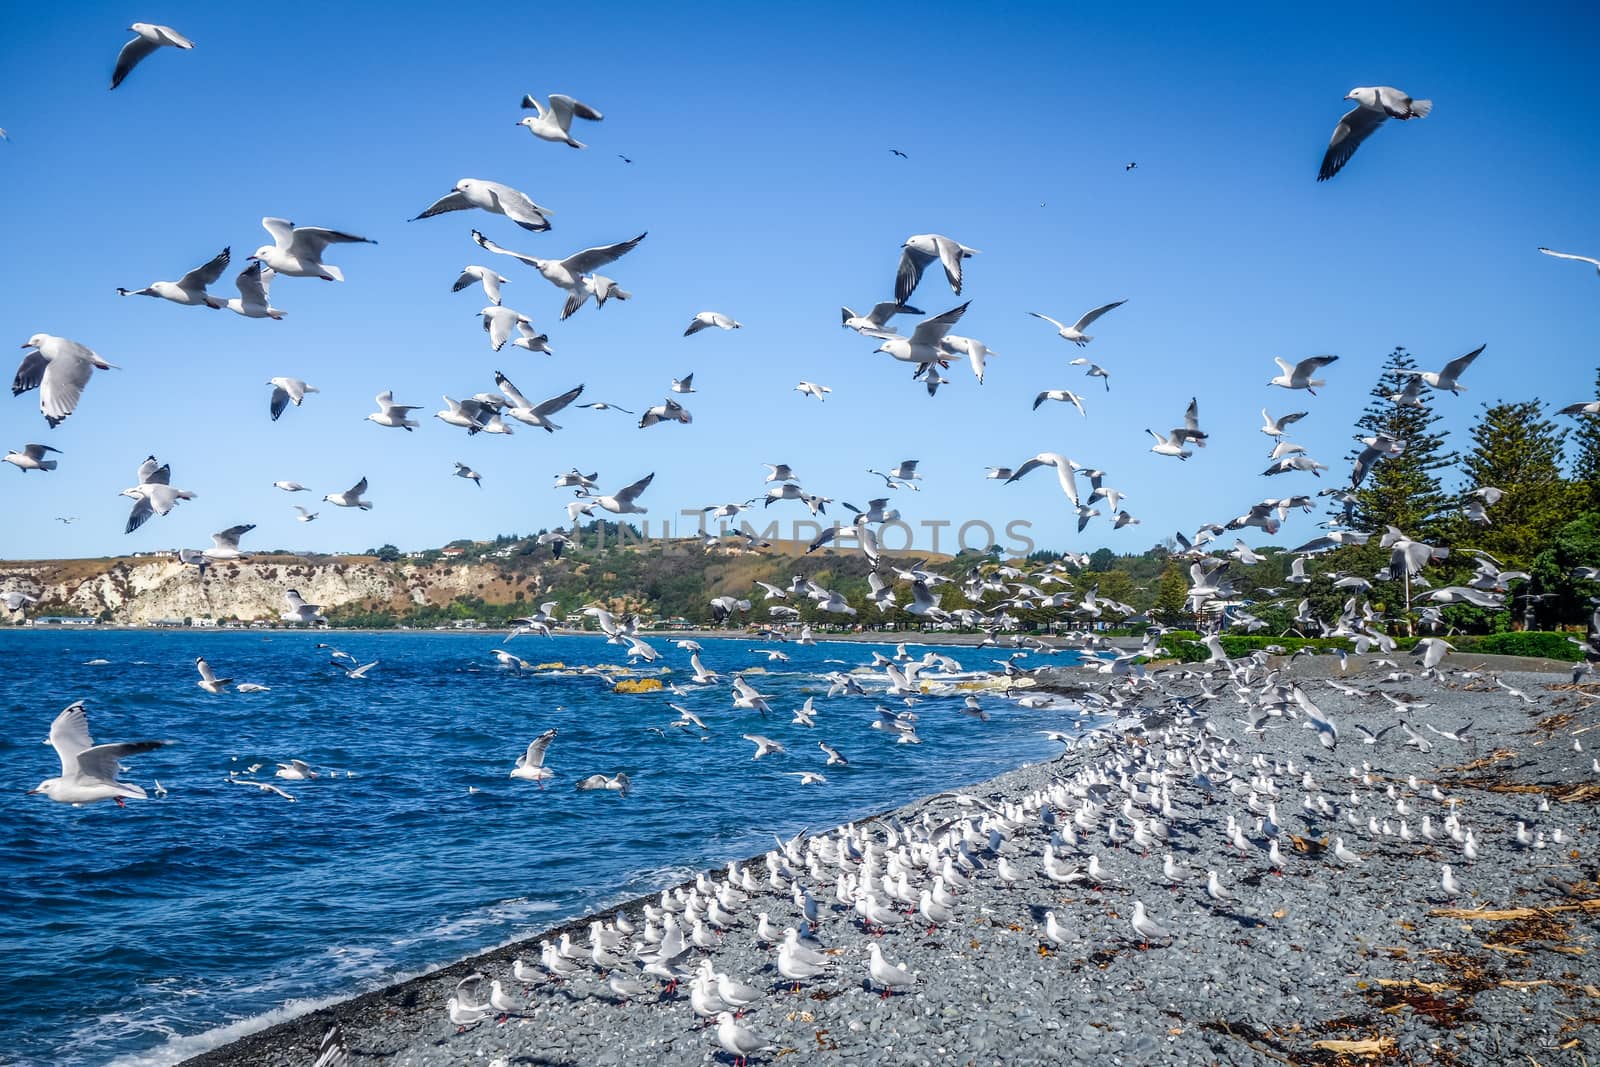 Seagulls flying on Kaikoura beach, New Zealand